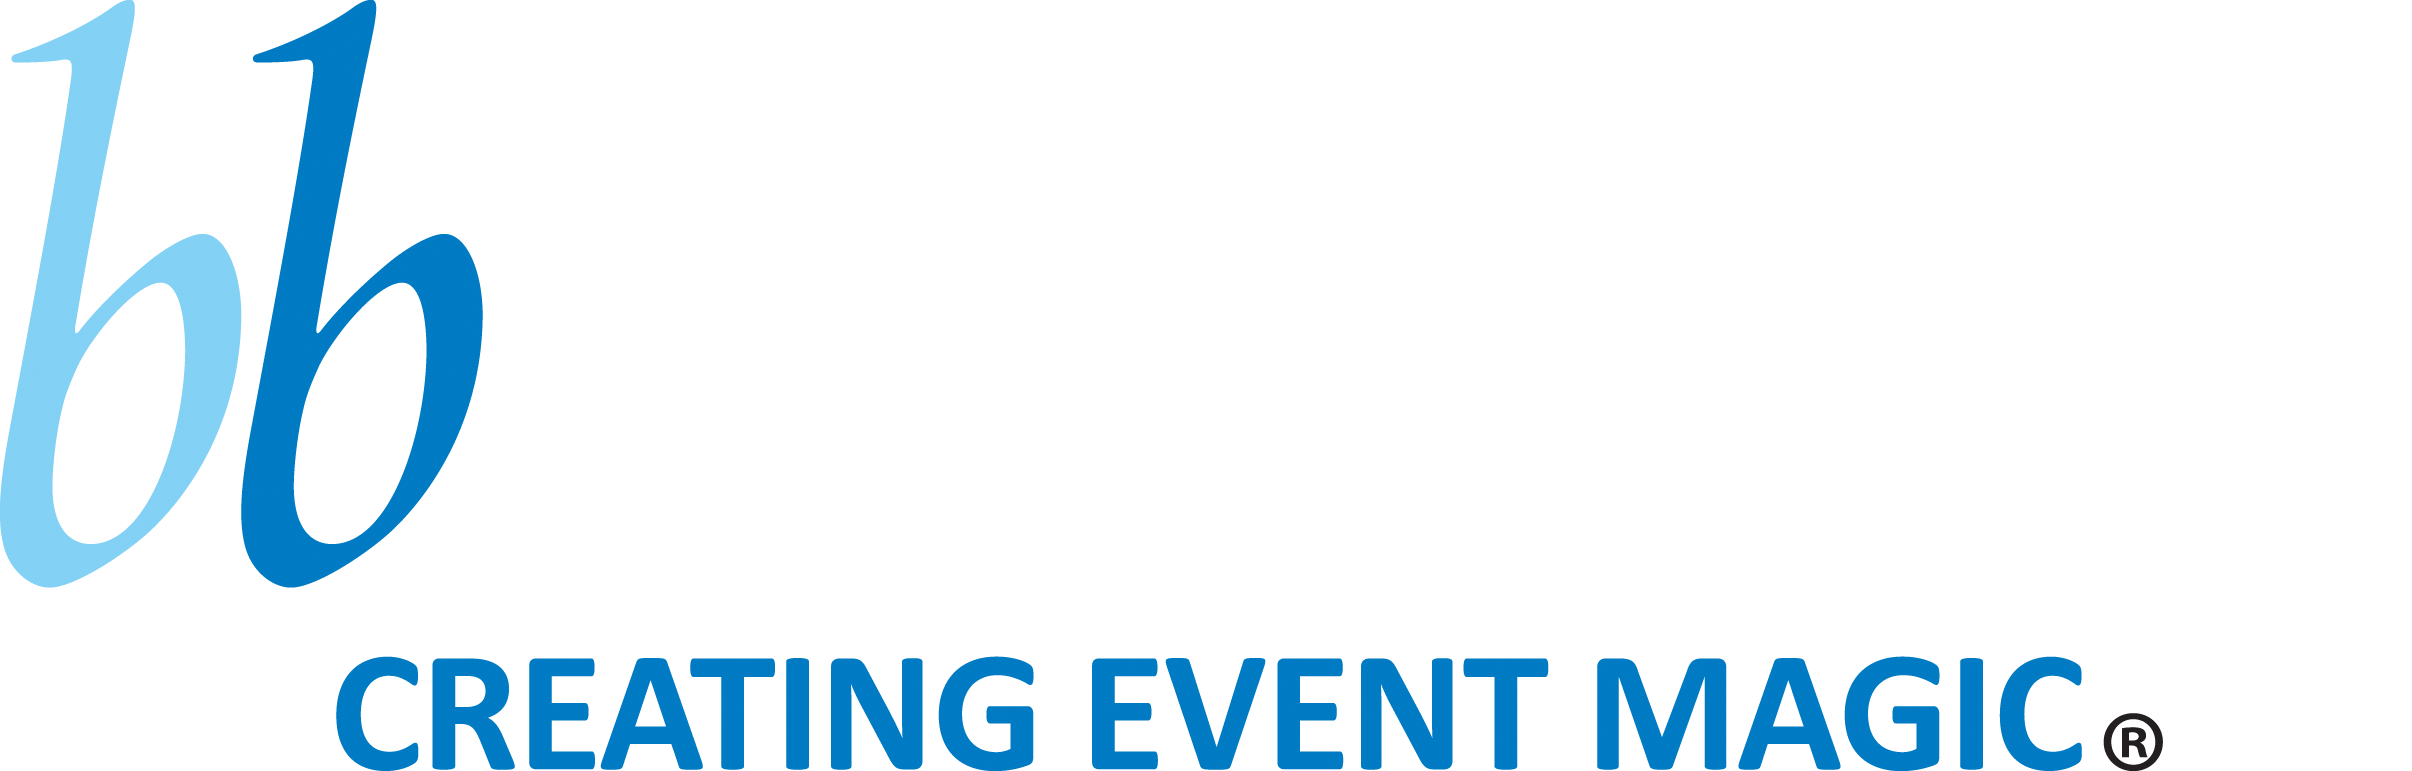 bbblanc-logo-white-cmyk